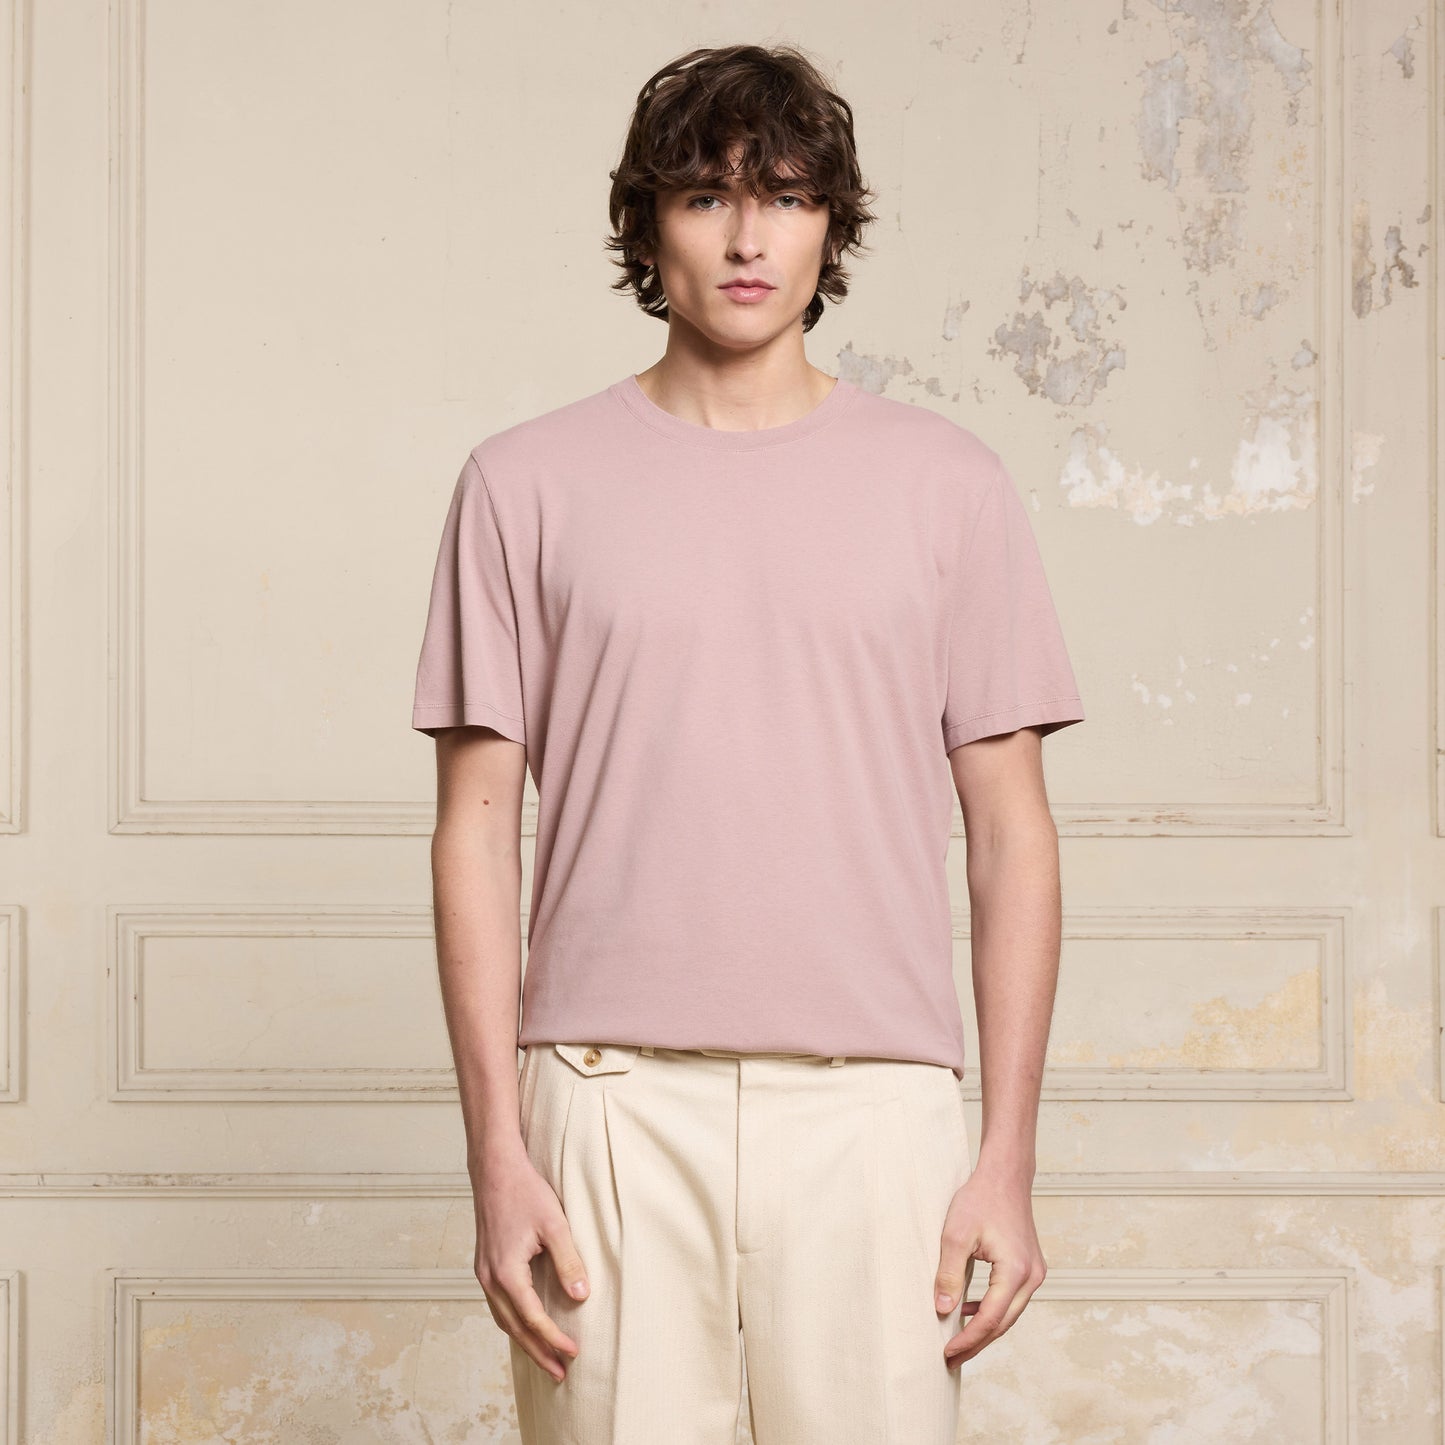 Tee-shirt rose pâle